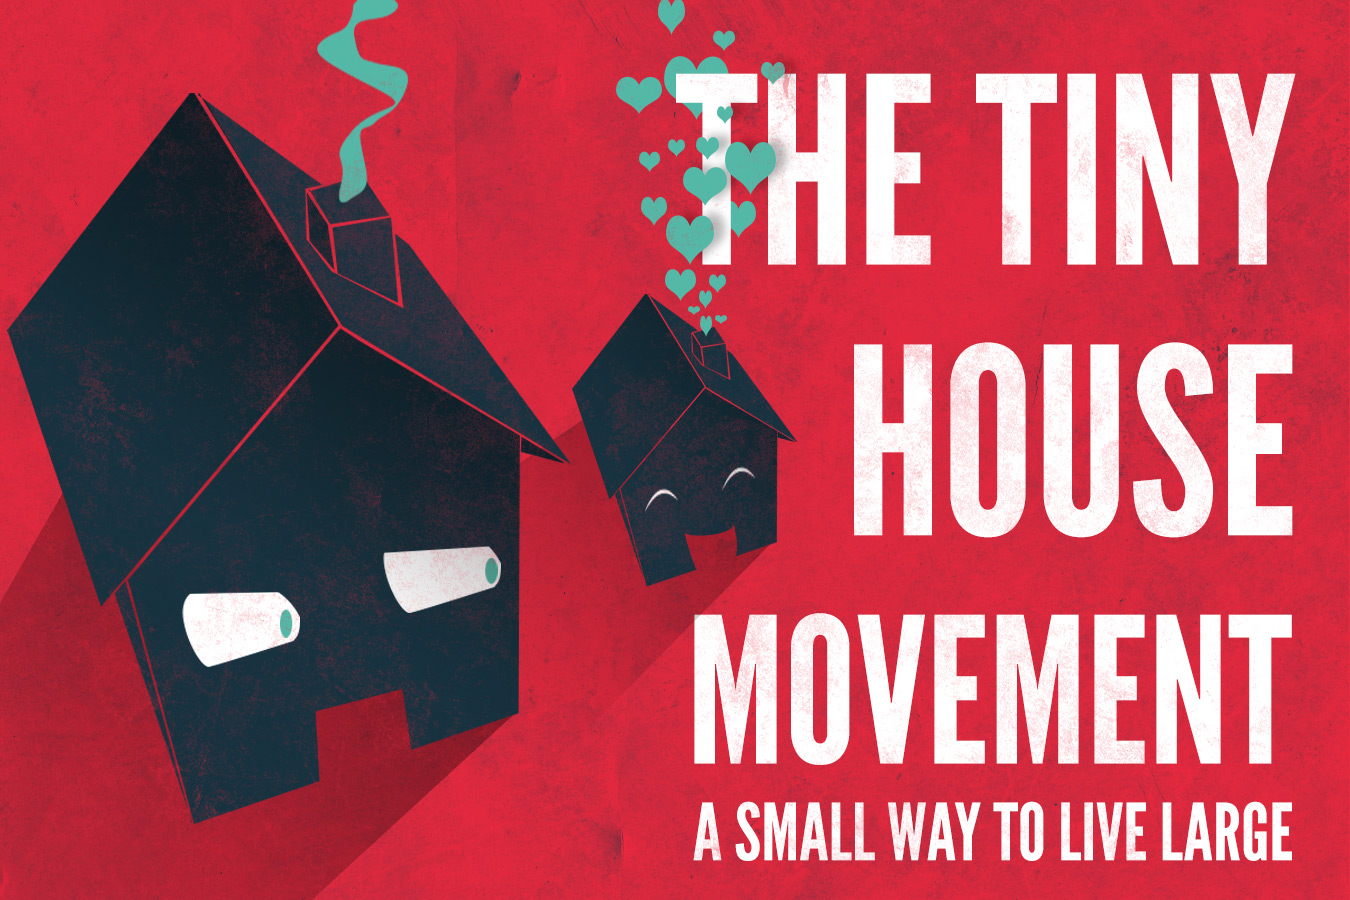 The Tiny House Movement